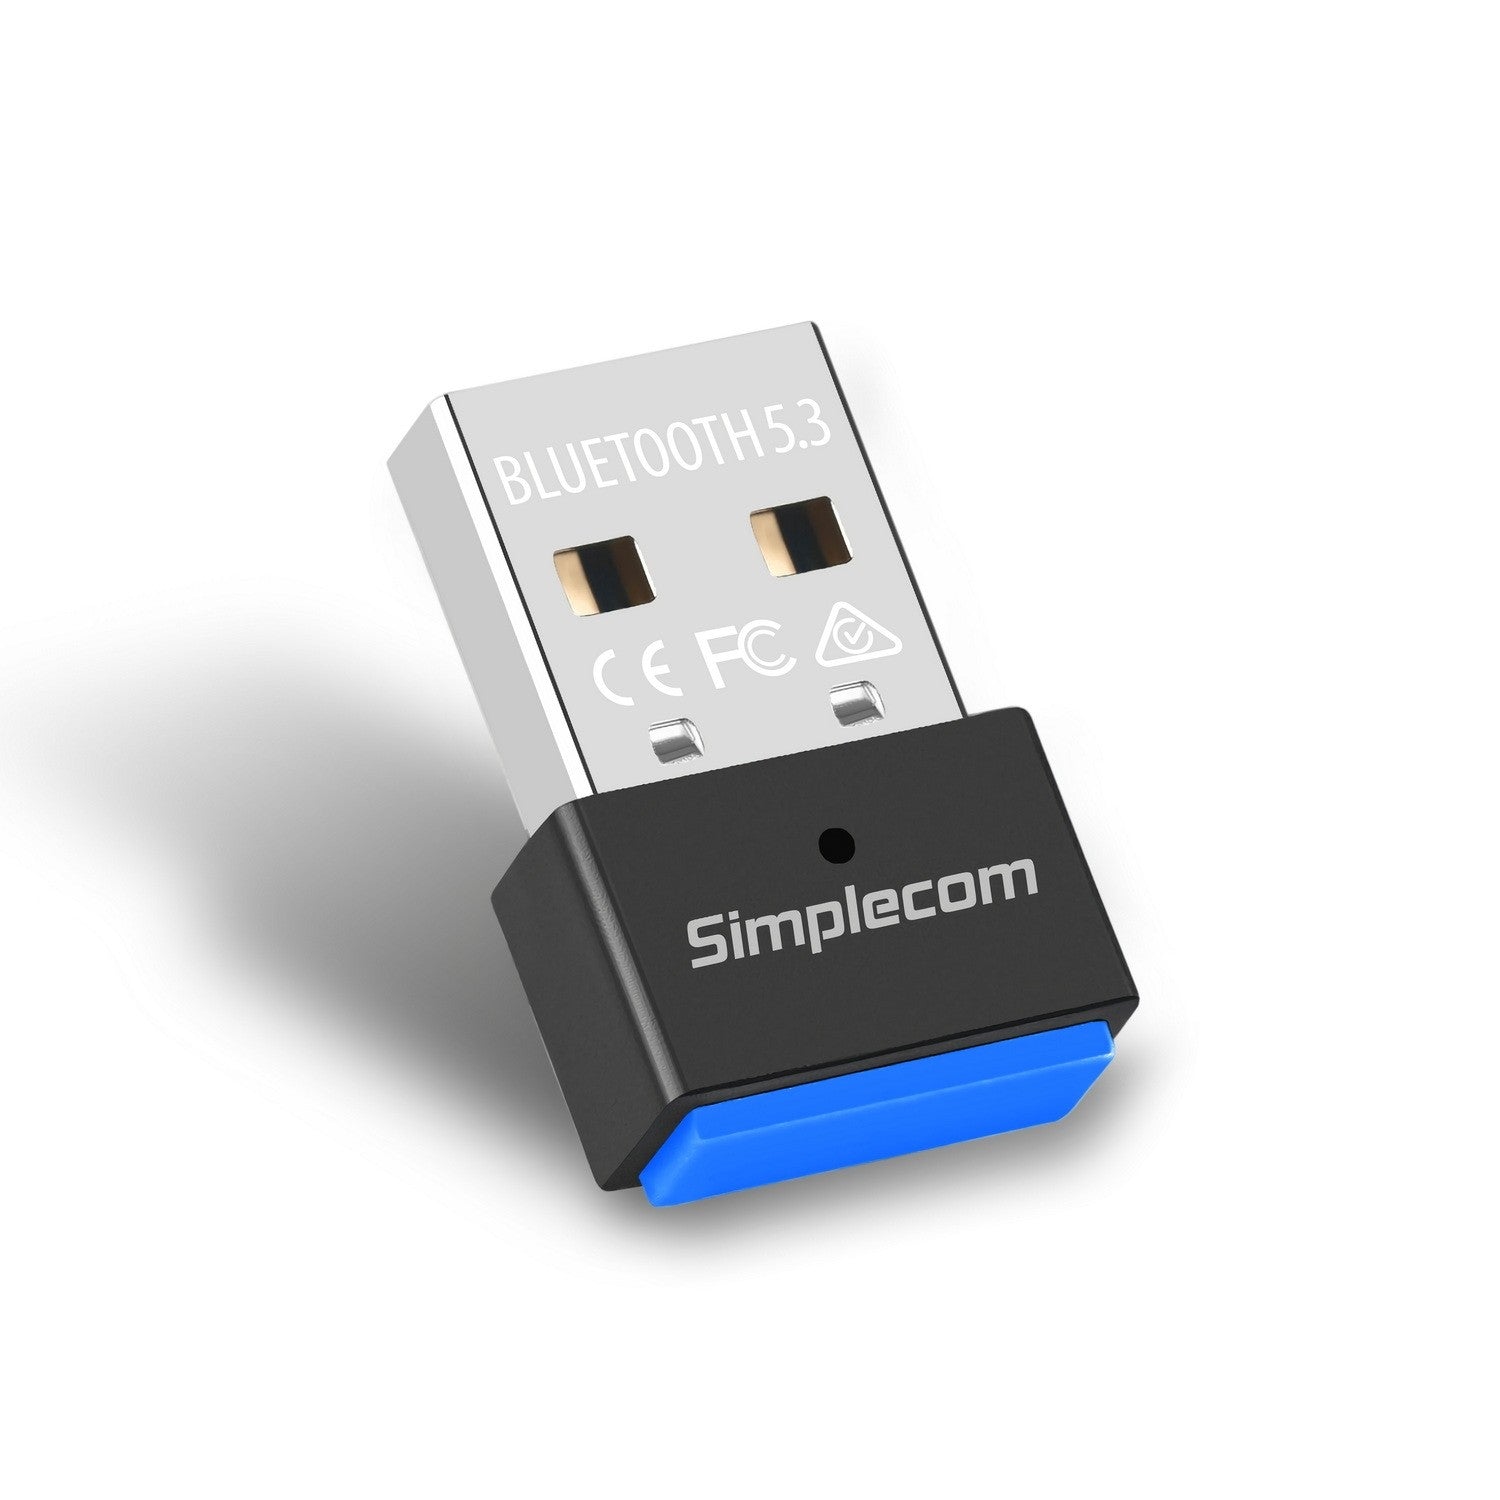 Simplecom Bluetooth 5.3 USB Adapter Wireless Dongle